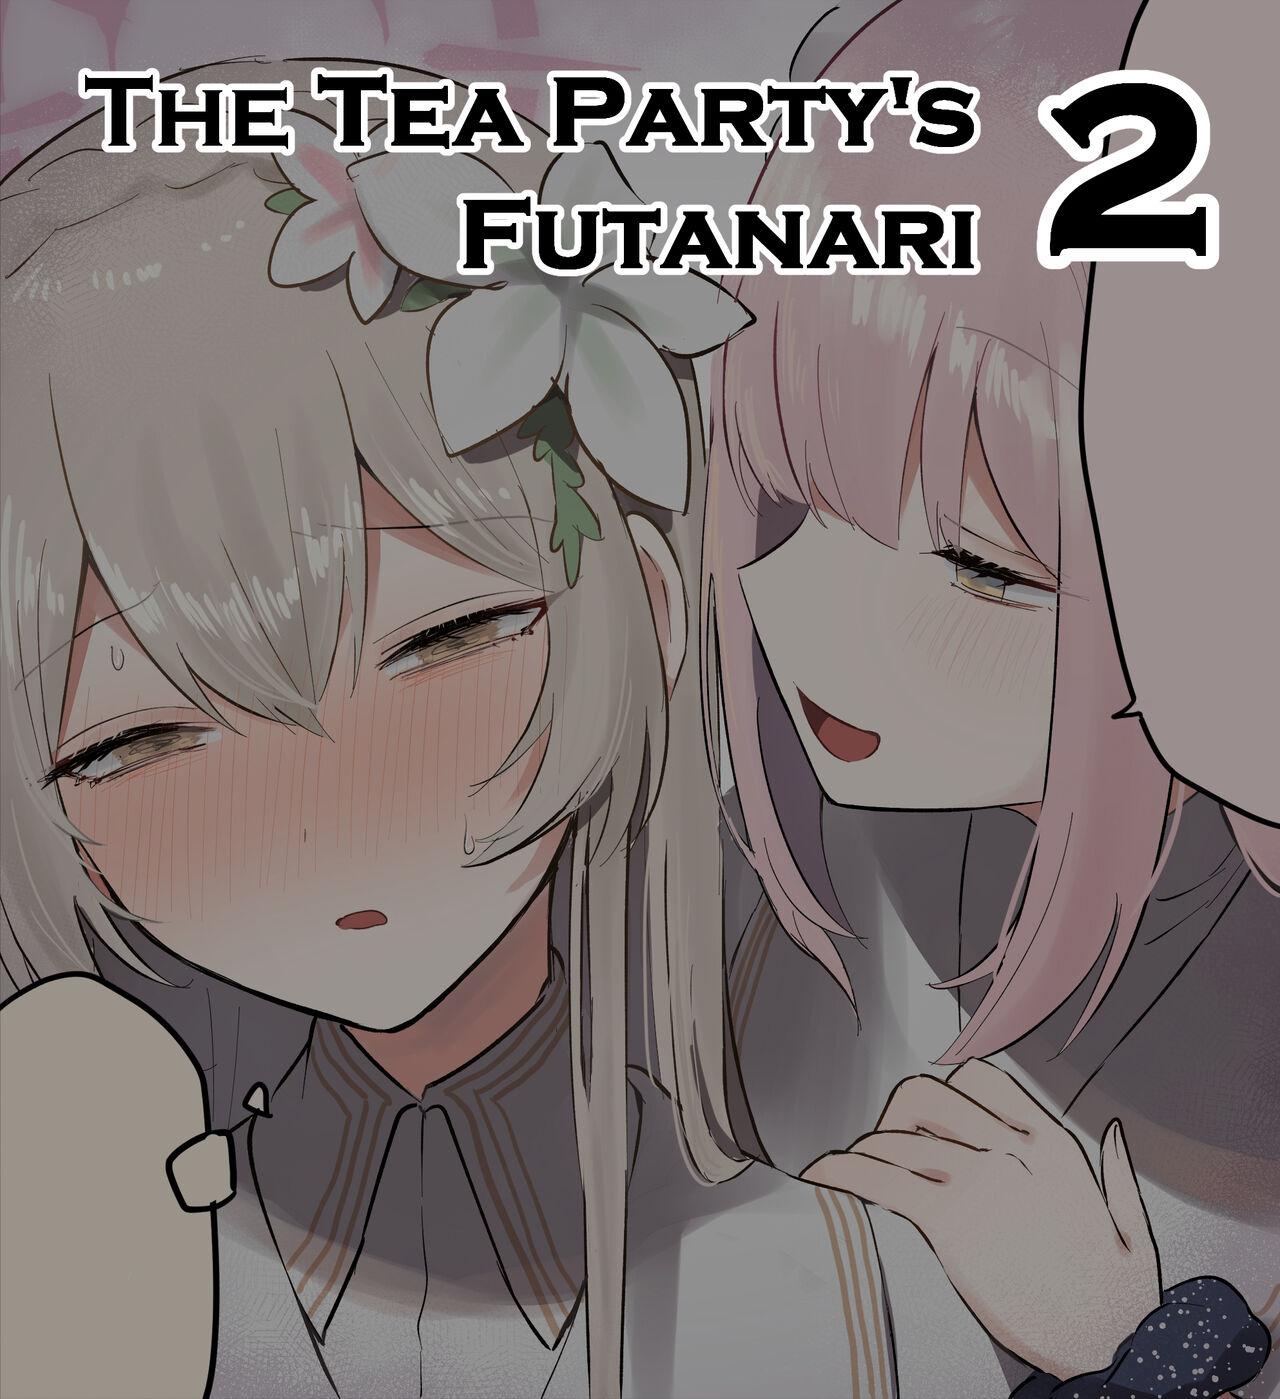 The Tea Party's Futanari #2 0